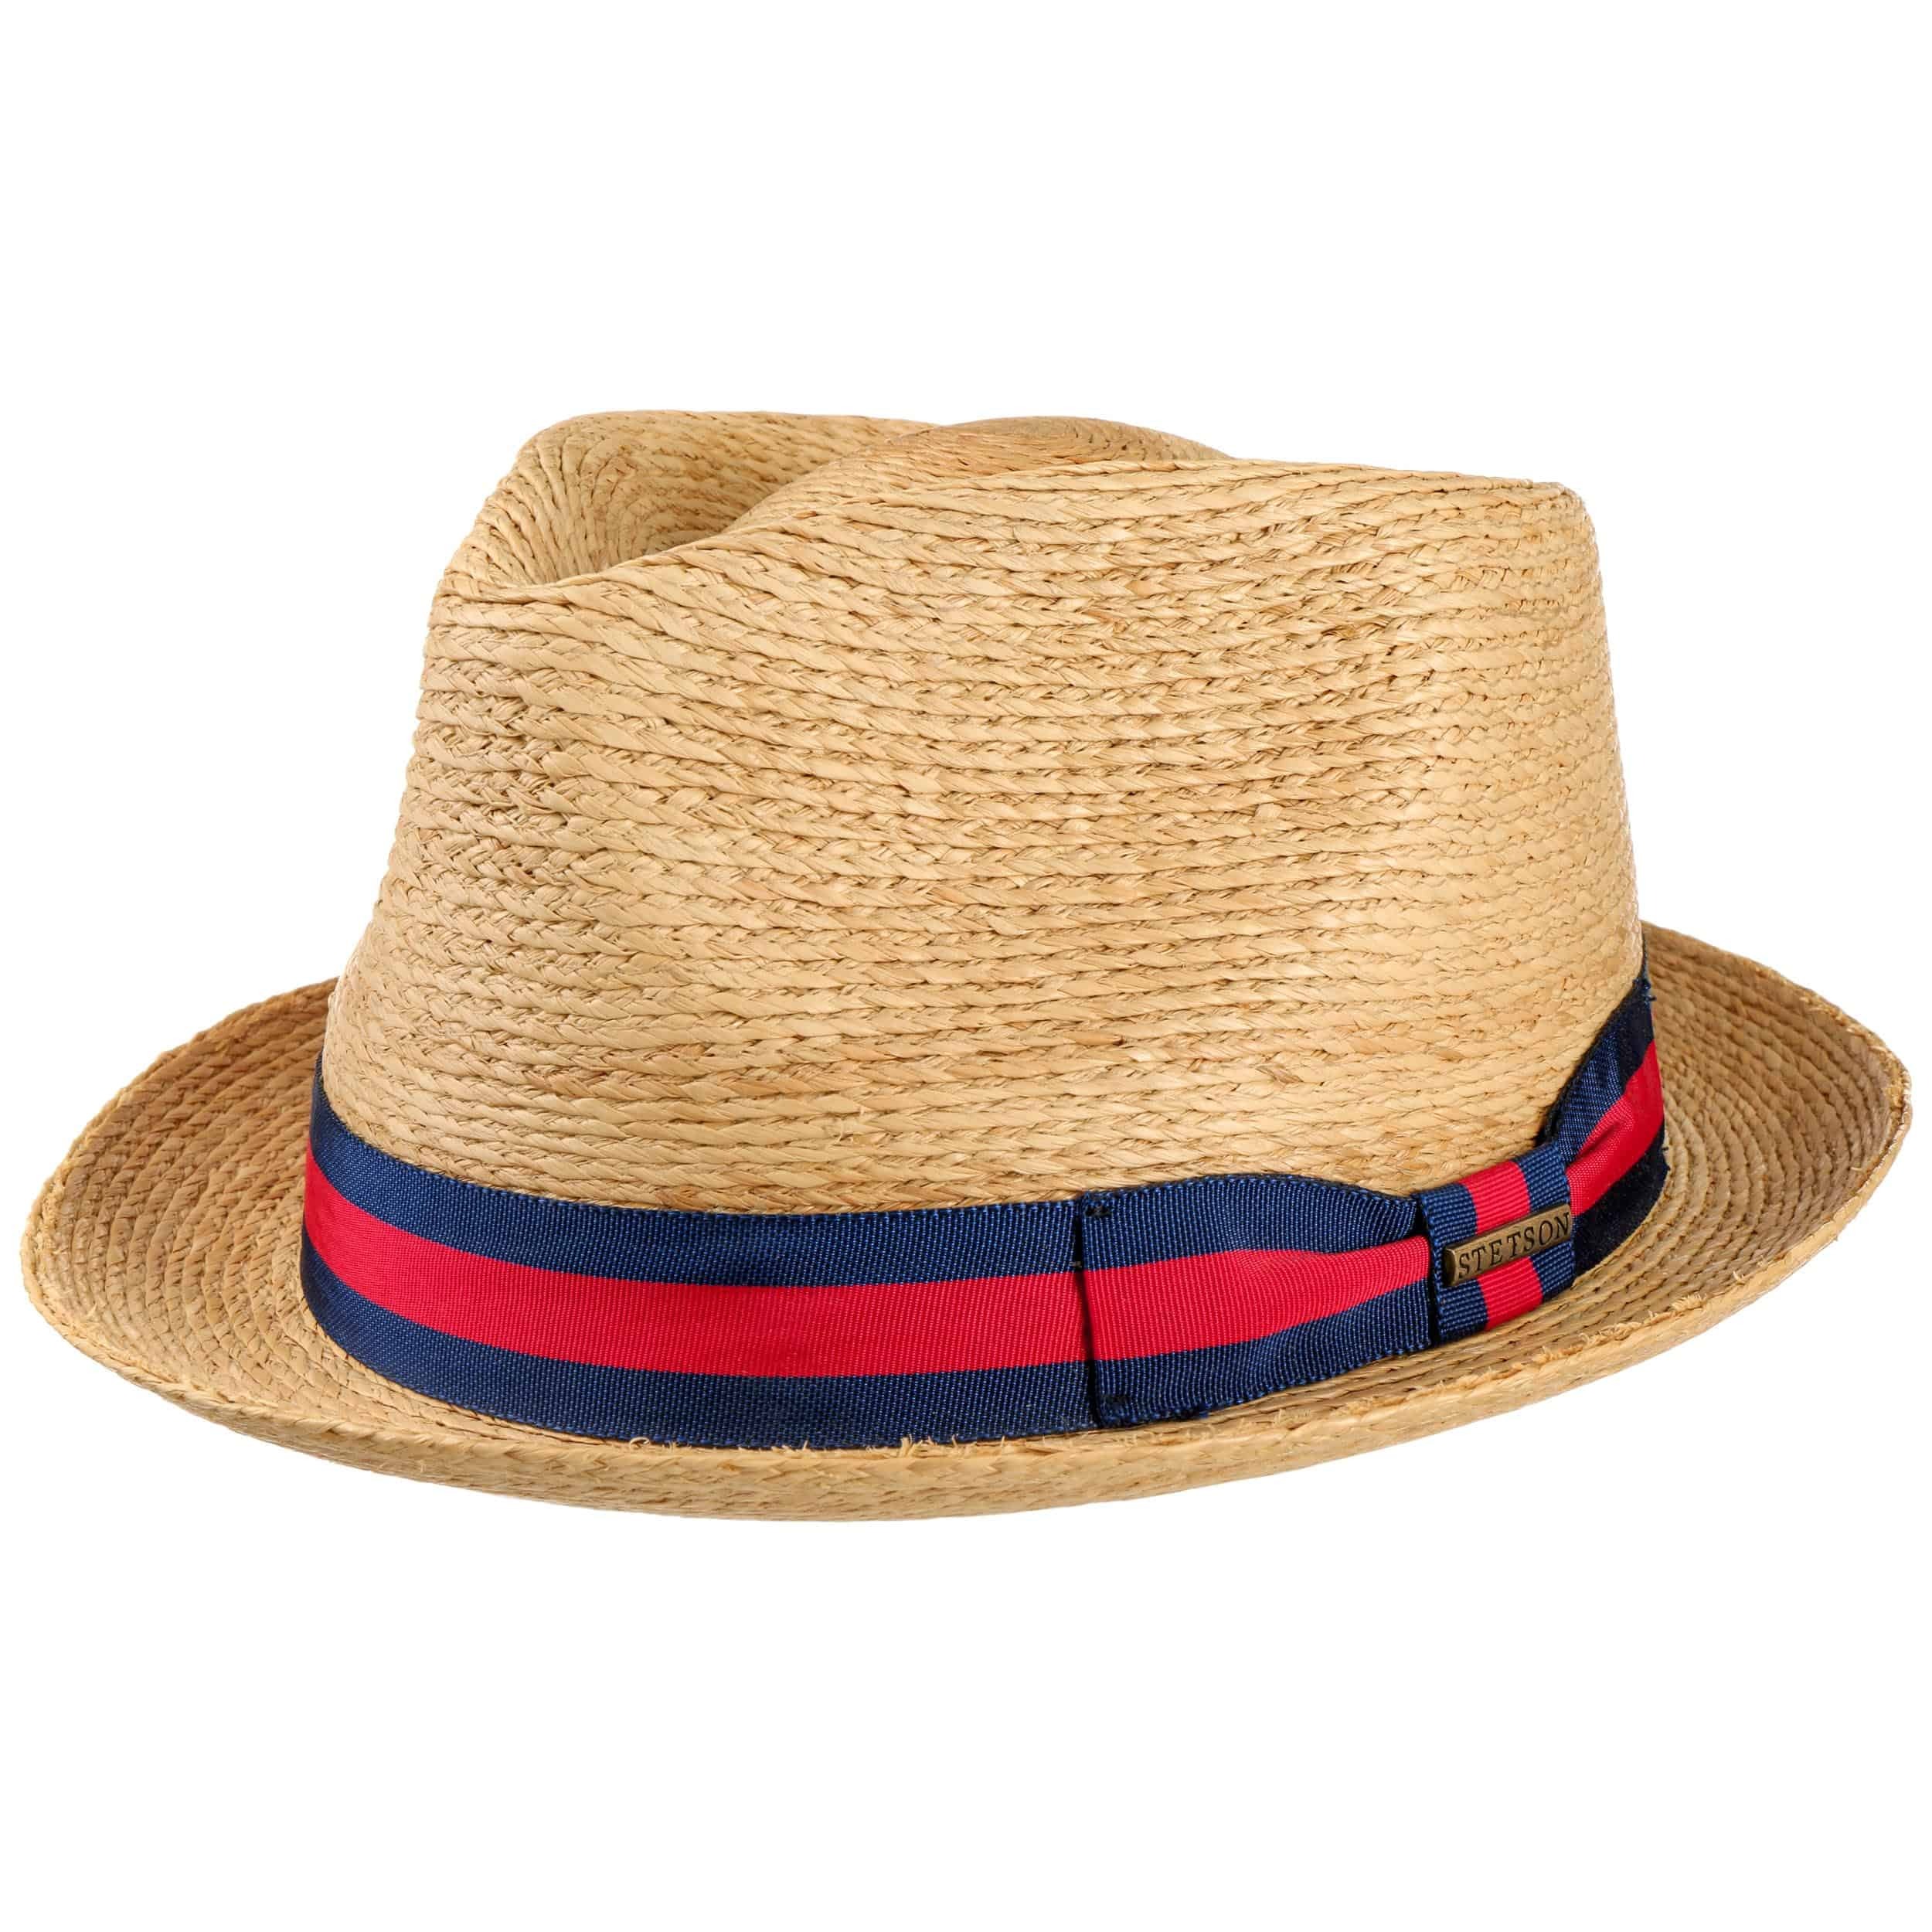 Hat playing. Stetson. Соломенные мужские шляпы Стетсон. Фермерская шляпа. Европейская фермерская шляпа.